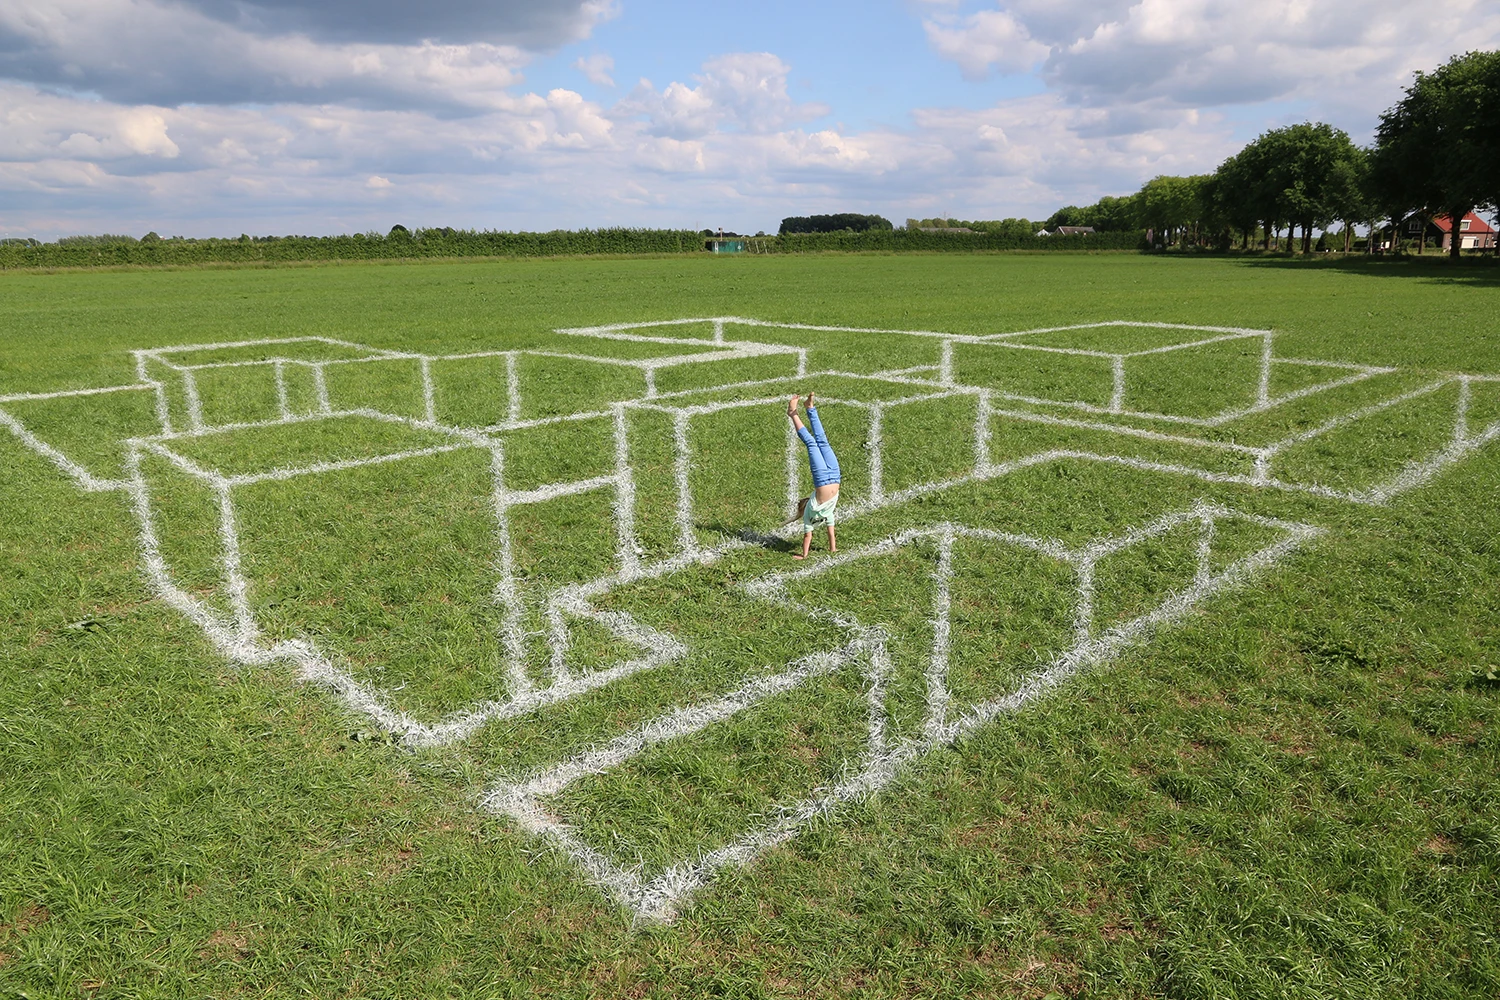 Aeropak Cheap Color Grass Turf Field Line Lawn Marking Spray Paint for sports